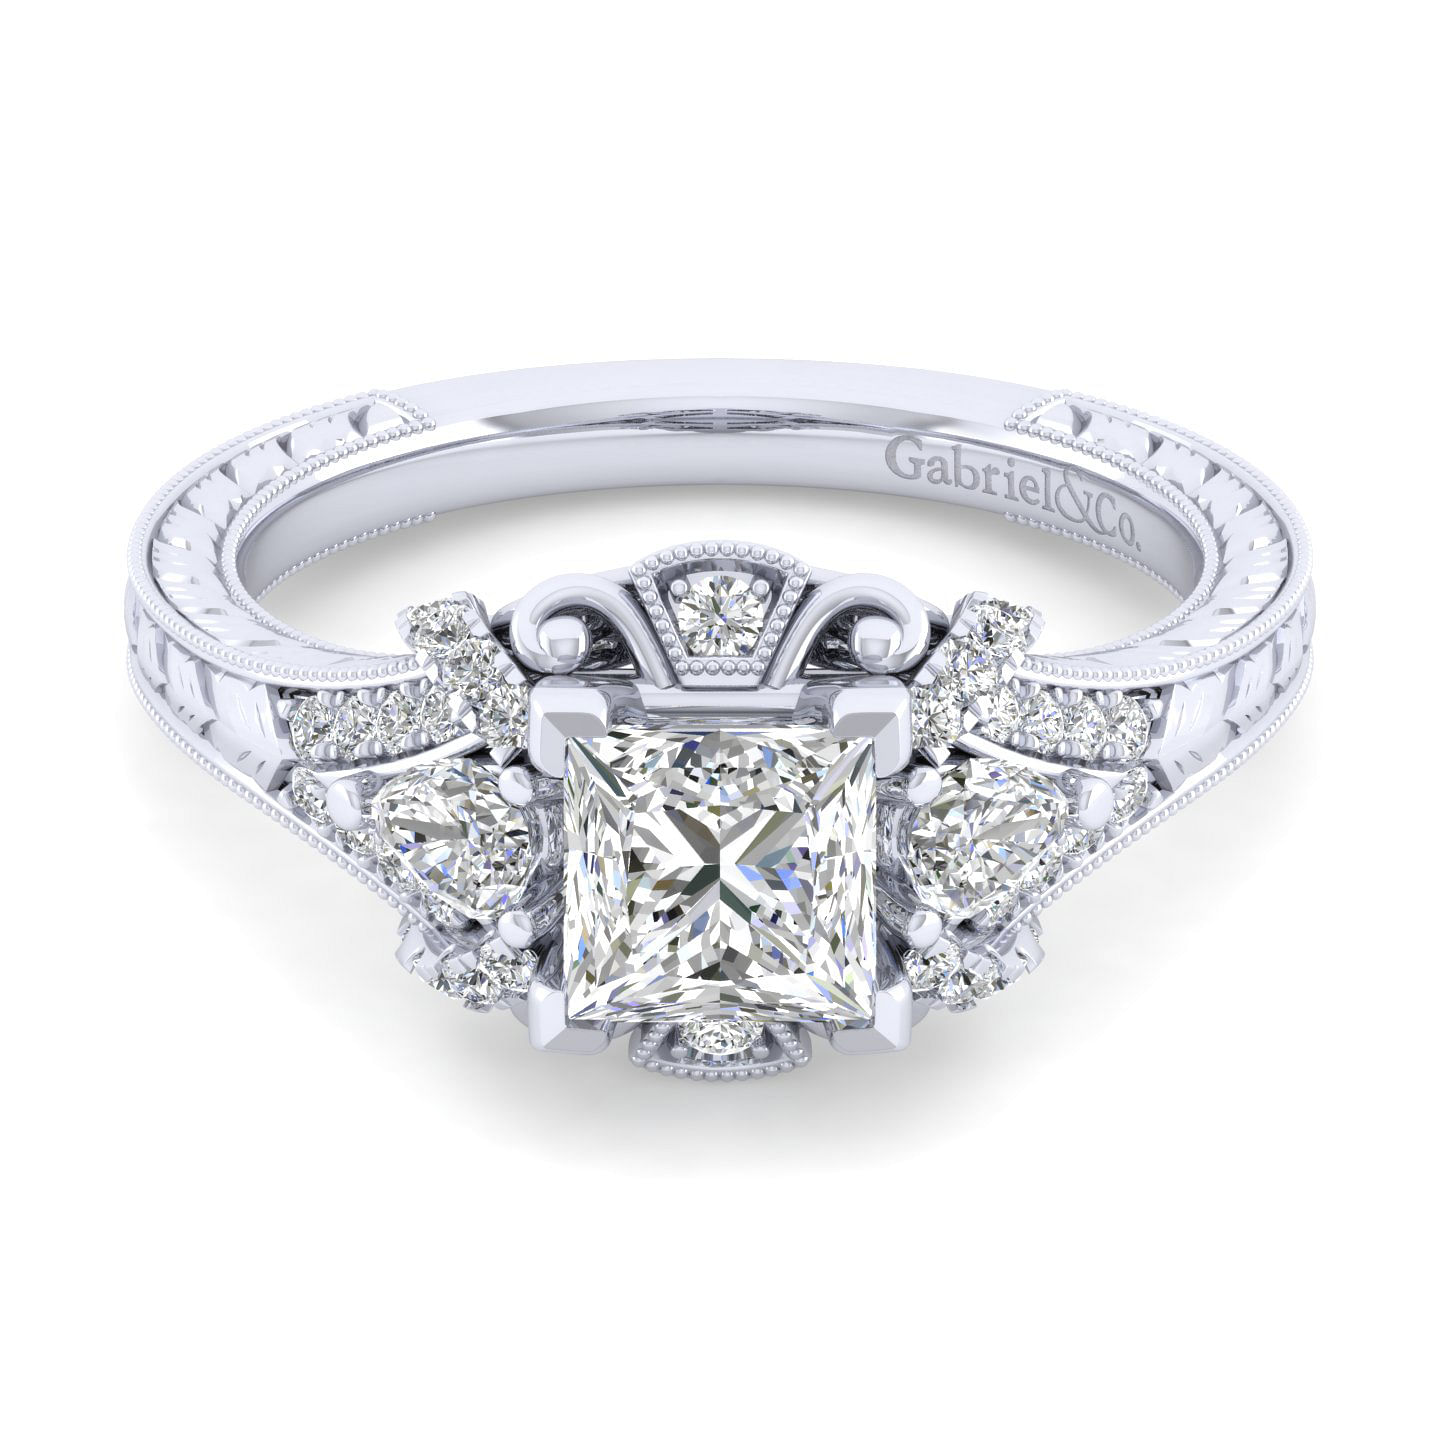 Chrystie - 14K White Gold Princess Cut Diamond Engagement Ring